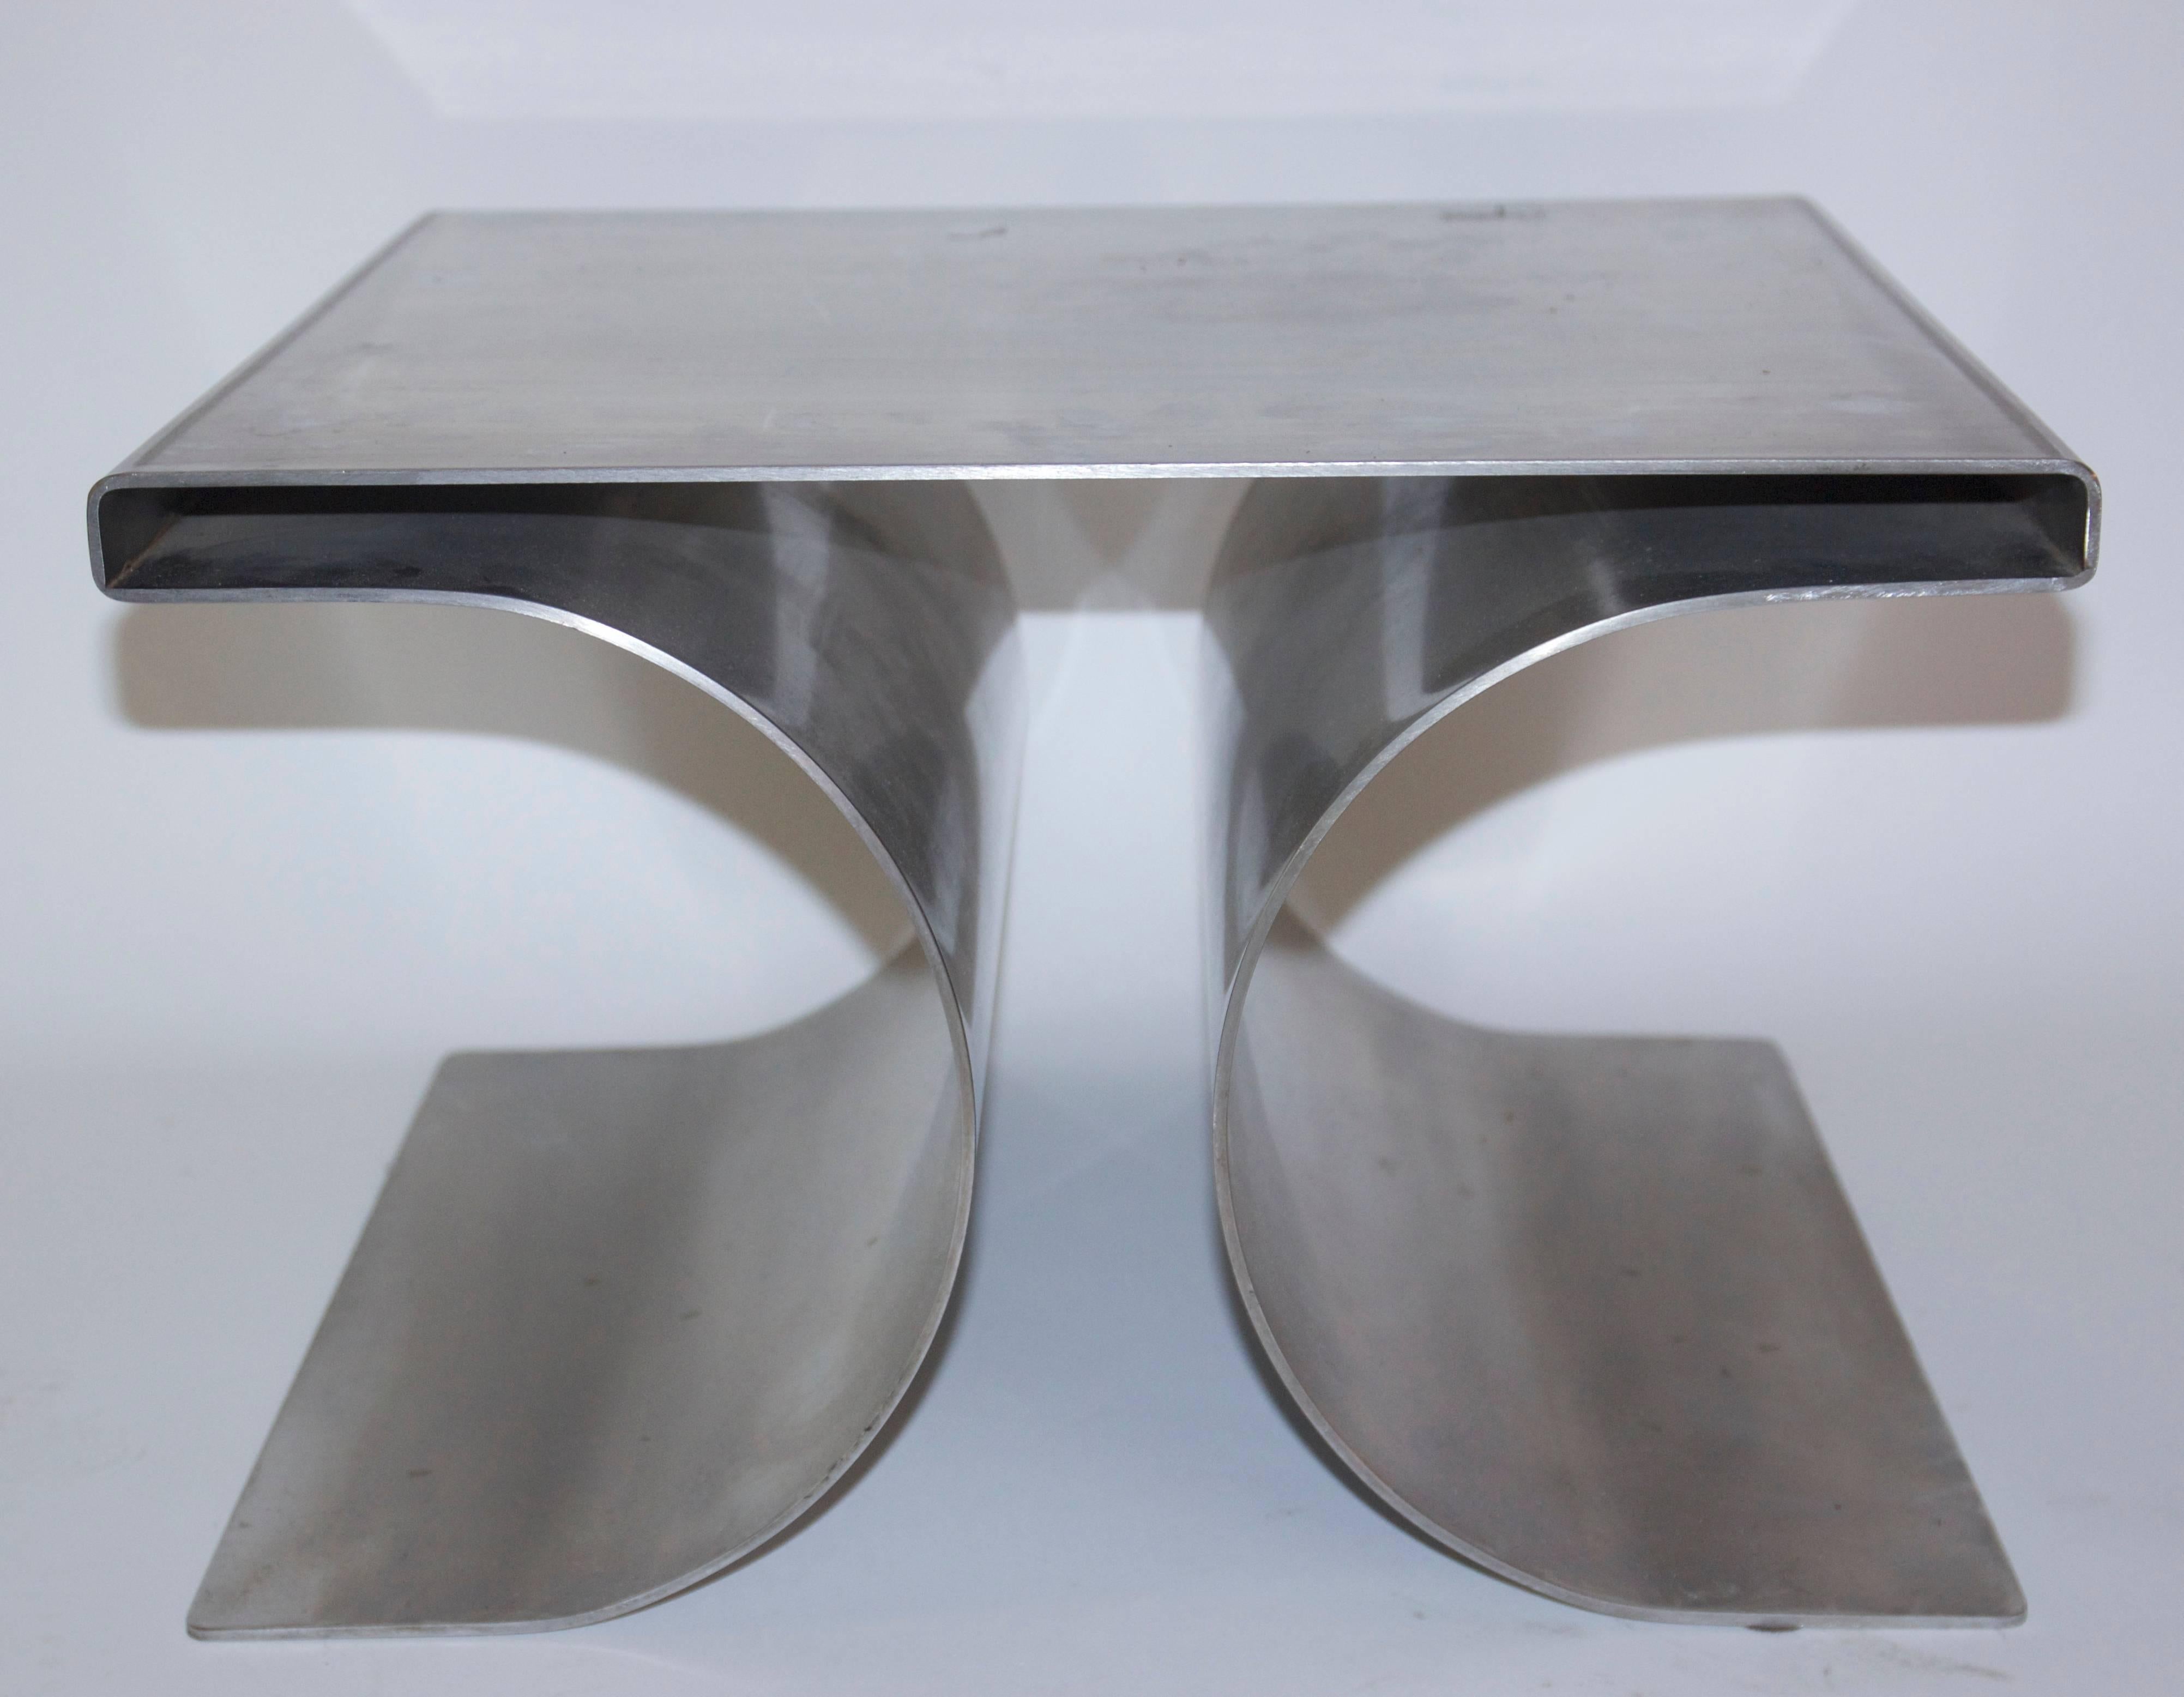 Michel Boyer,
metal coffee table,
model X, Ugine-Guegnon manufacturer,
circa 1968, Paris.
Measure: Height 31 cm, width 50 cm, depth 50 cm.